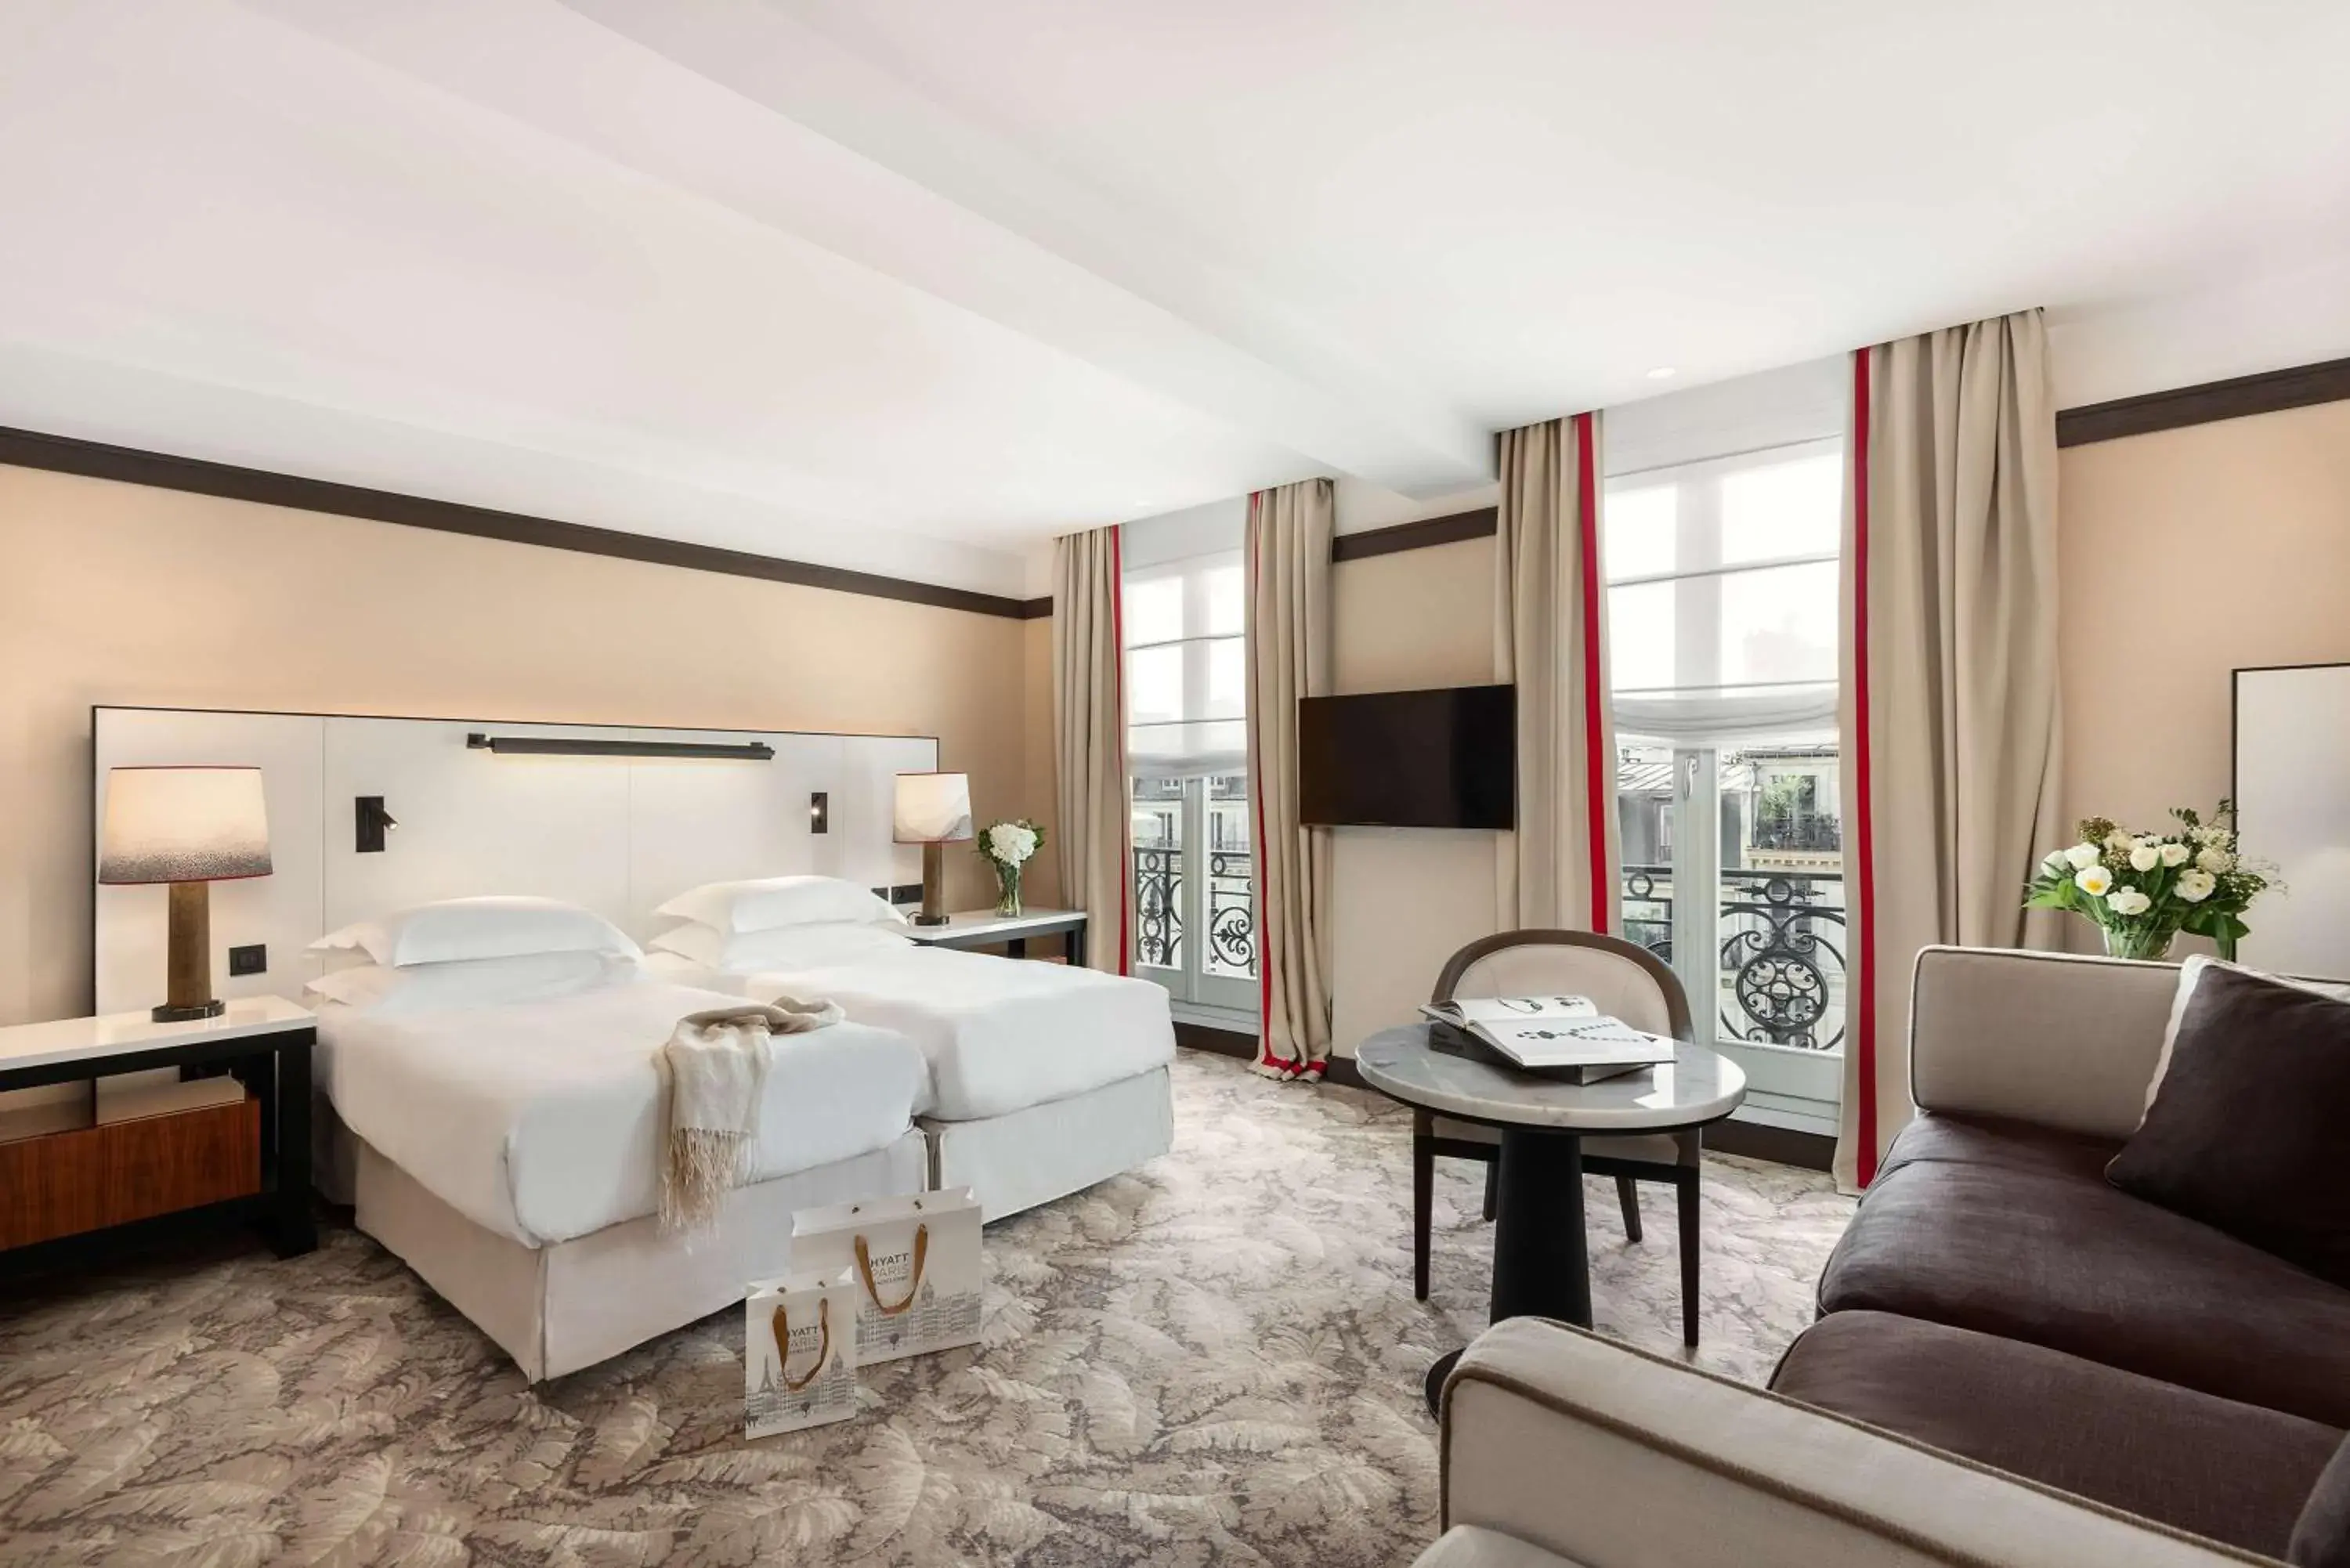 Photo of the whole room in Hyatt Paris Madeleine Hotel